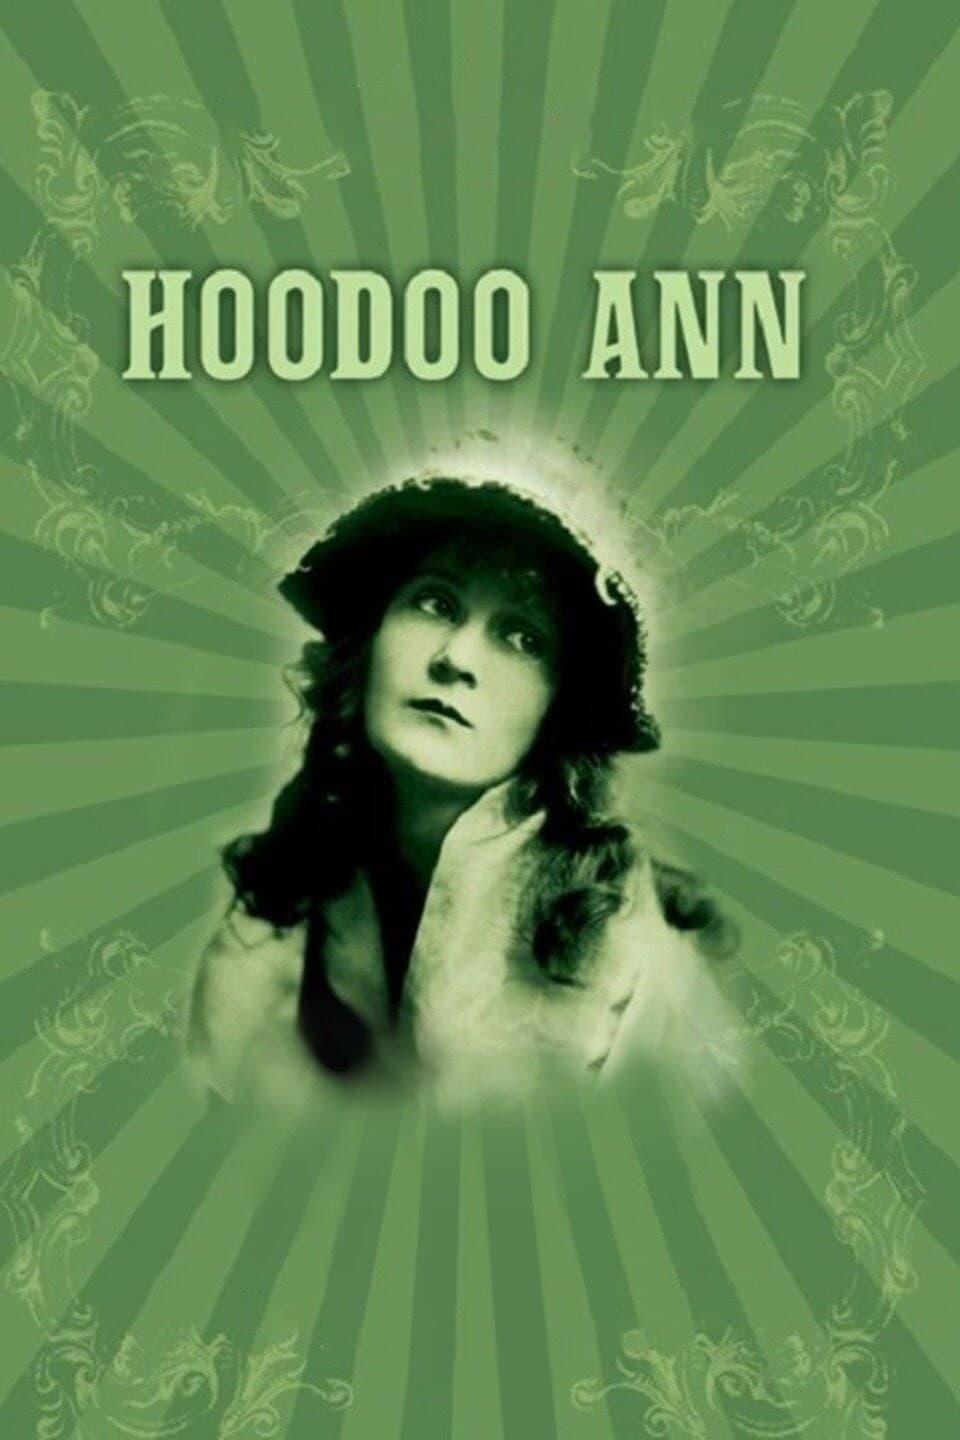 Hoodoo Ann poster